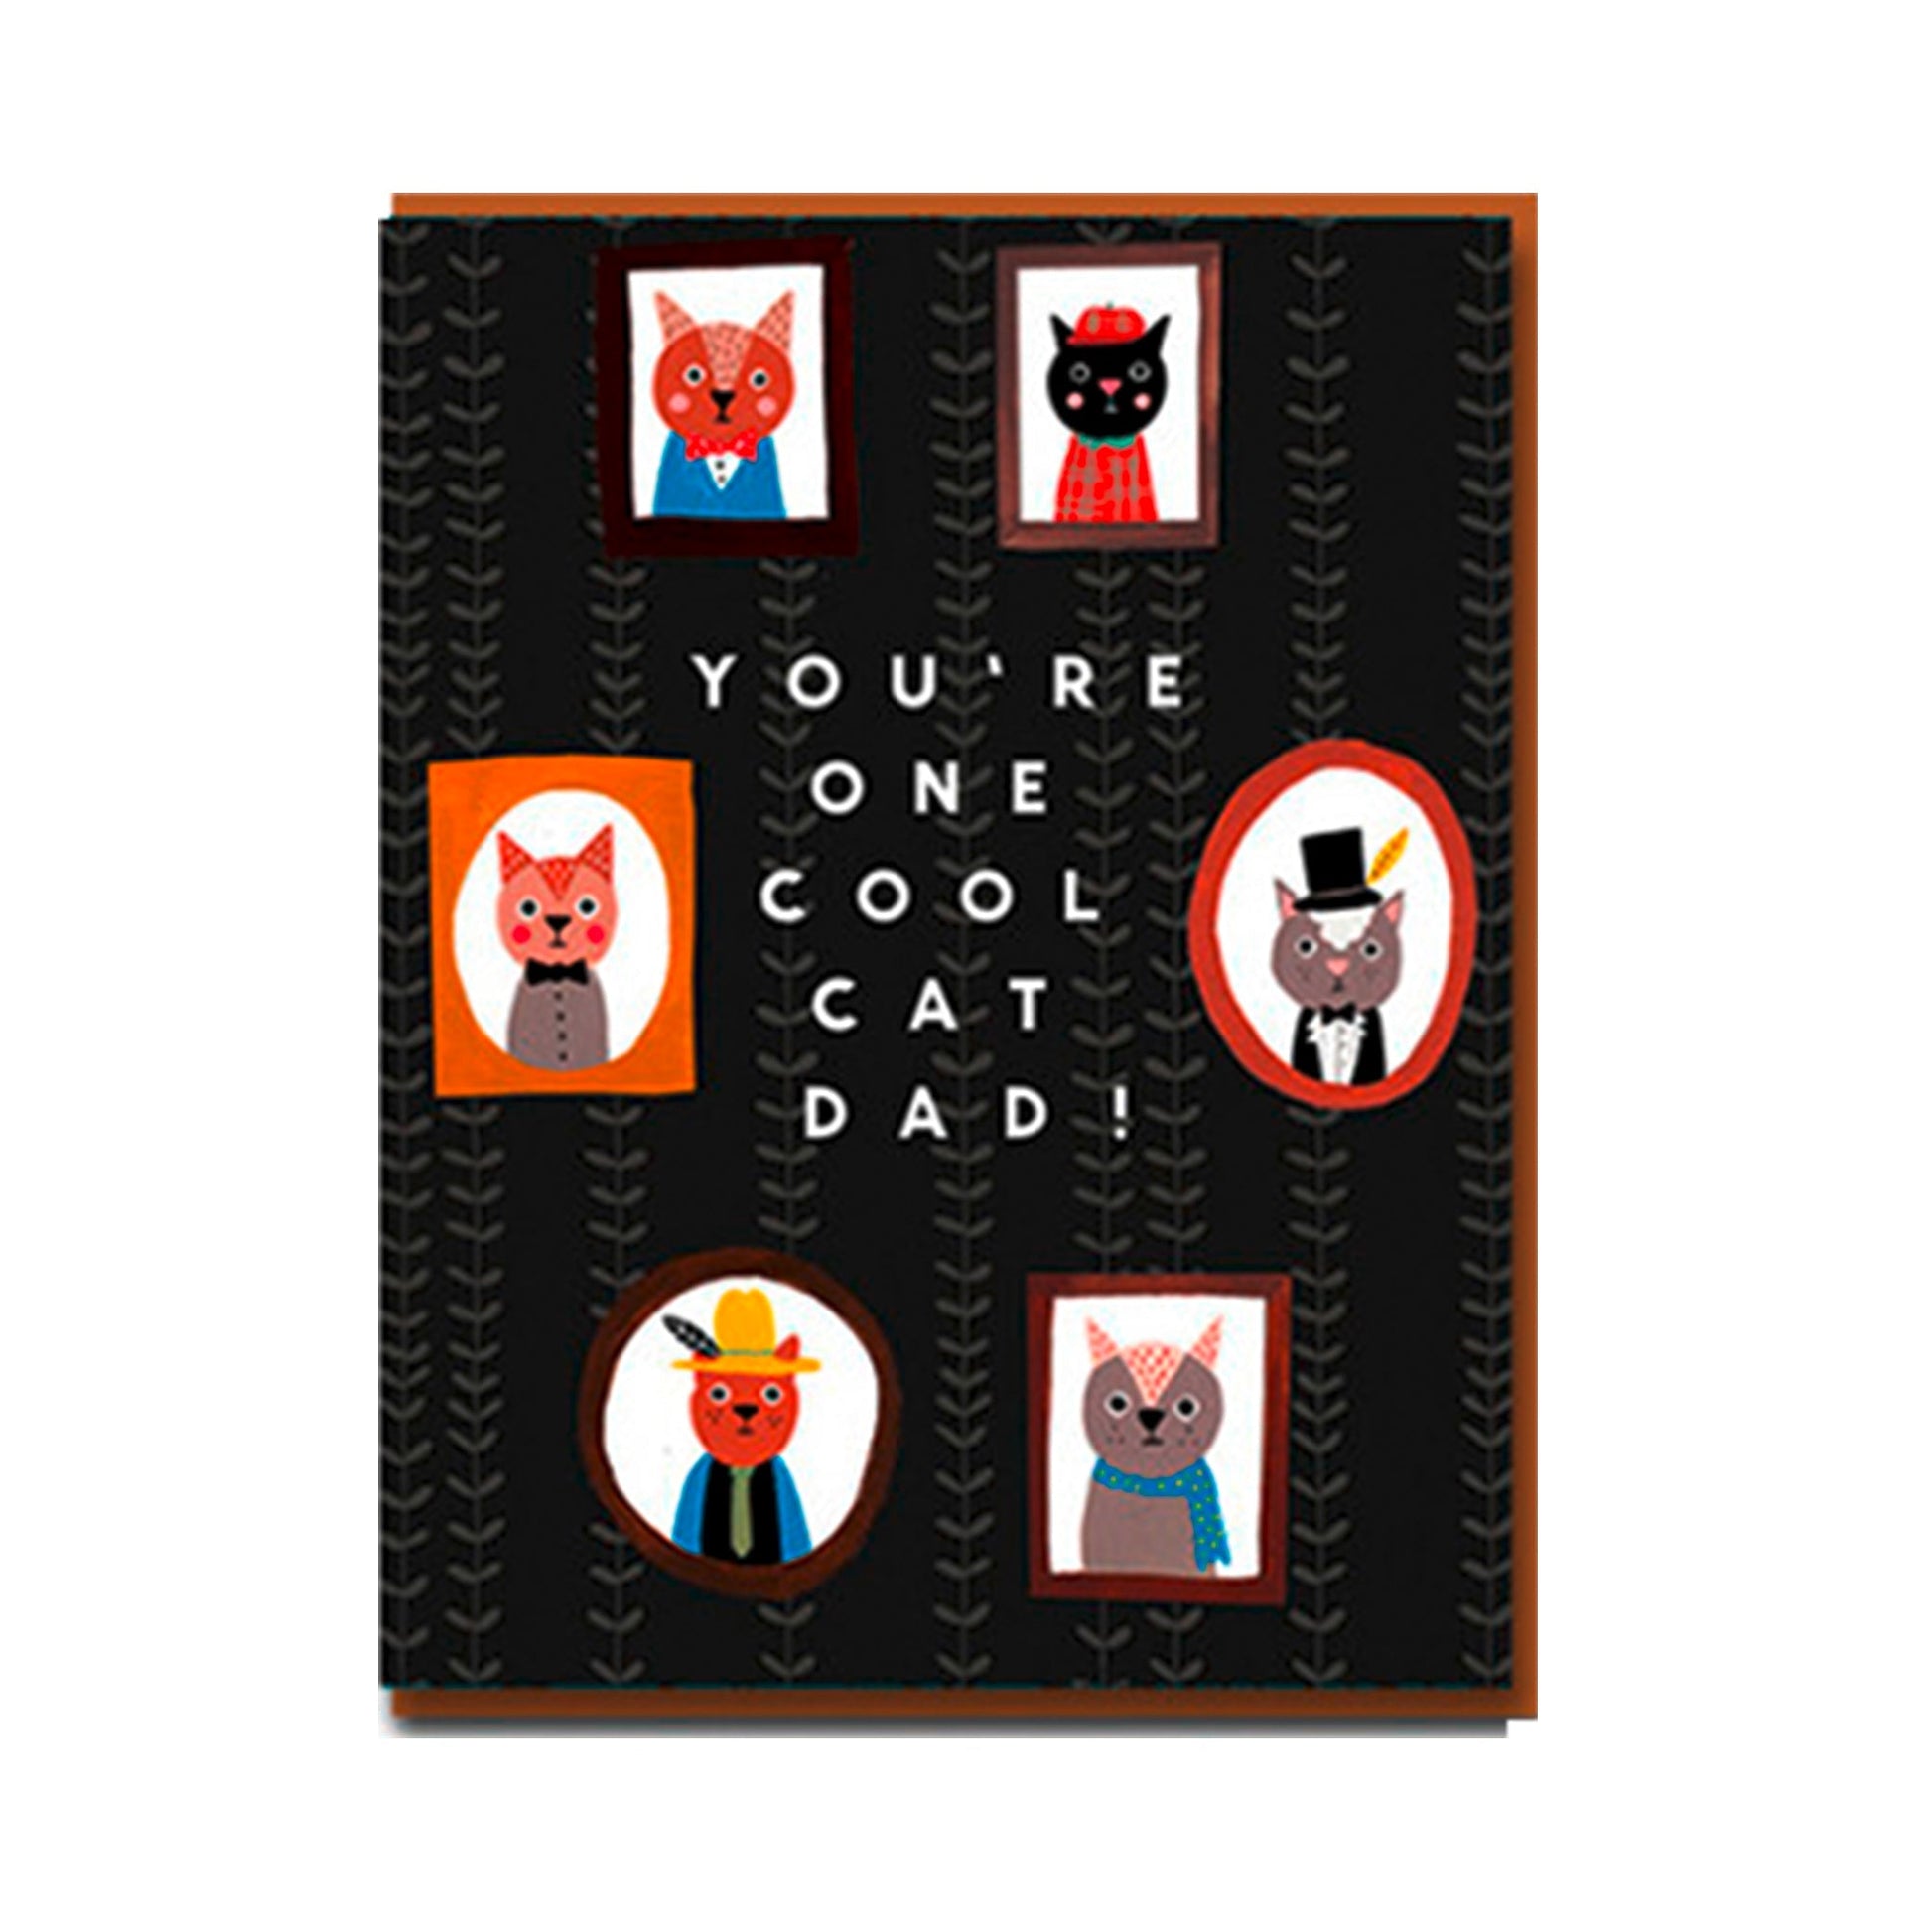 Grußkarte "You're one cool cat, Dad!" - Vandeley